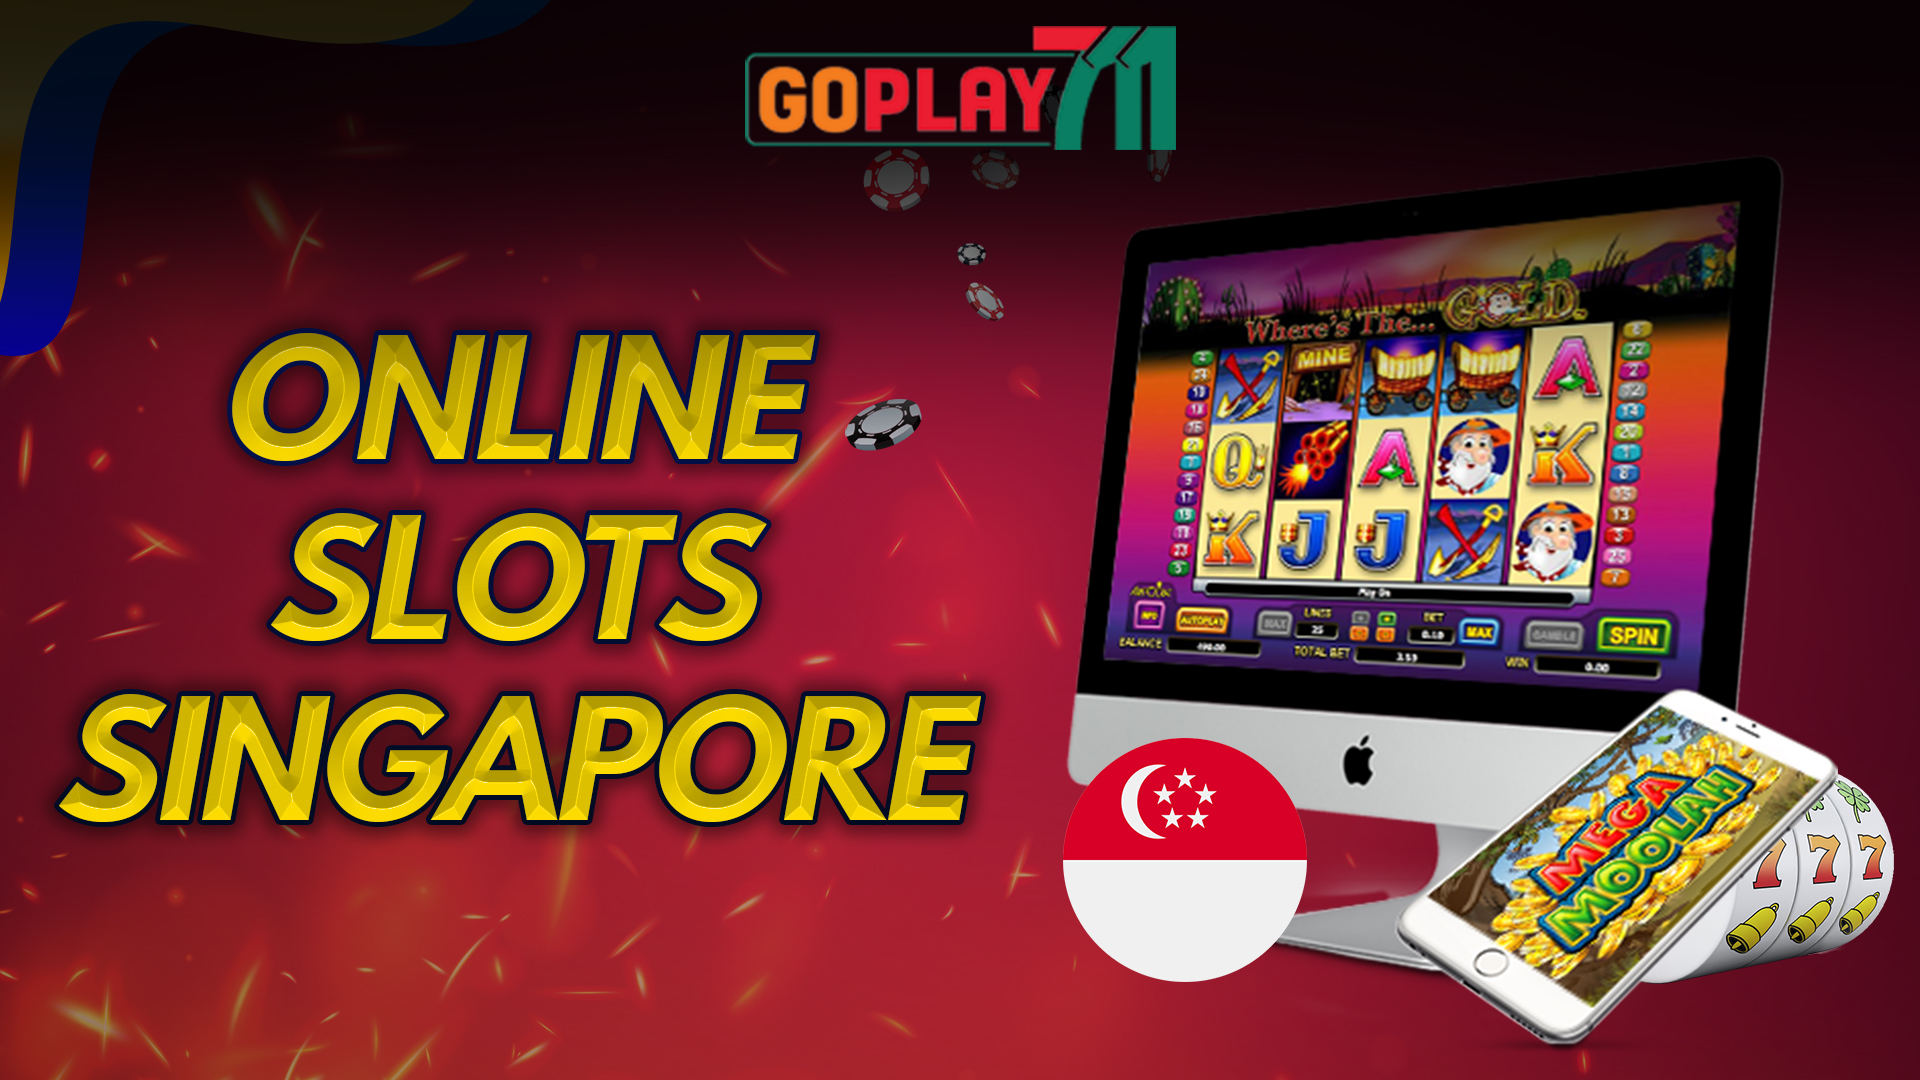 Online slots Singapore